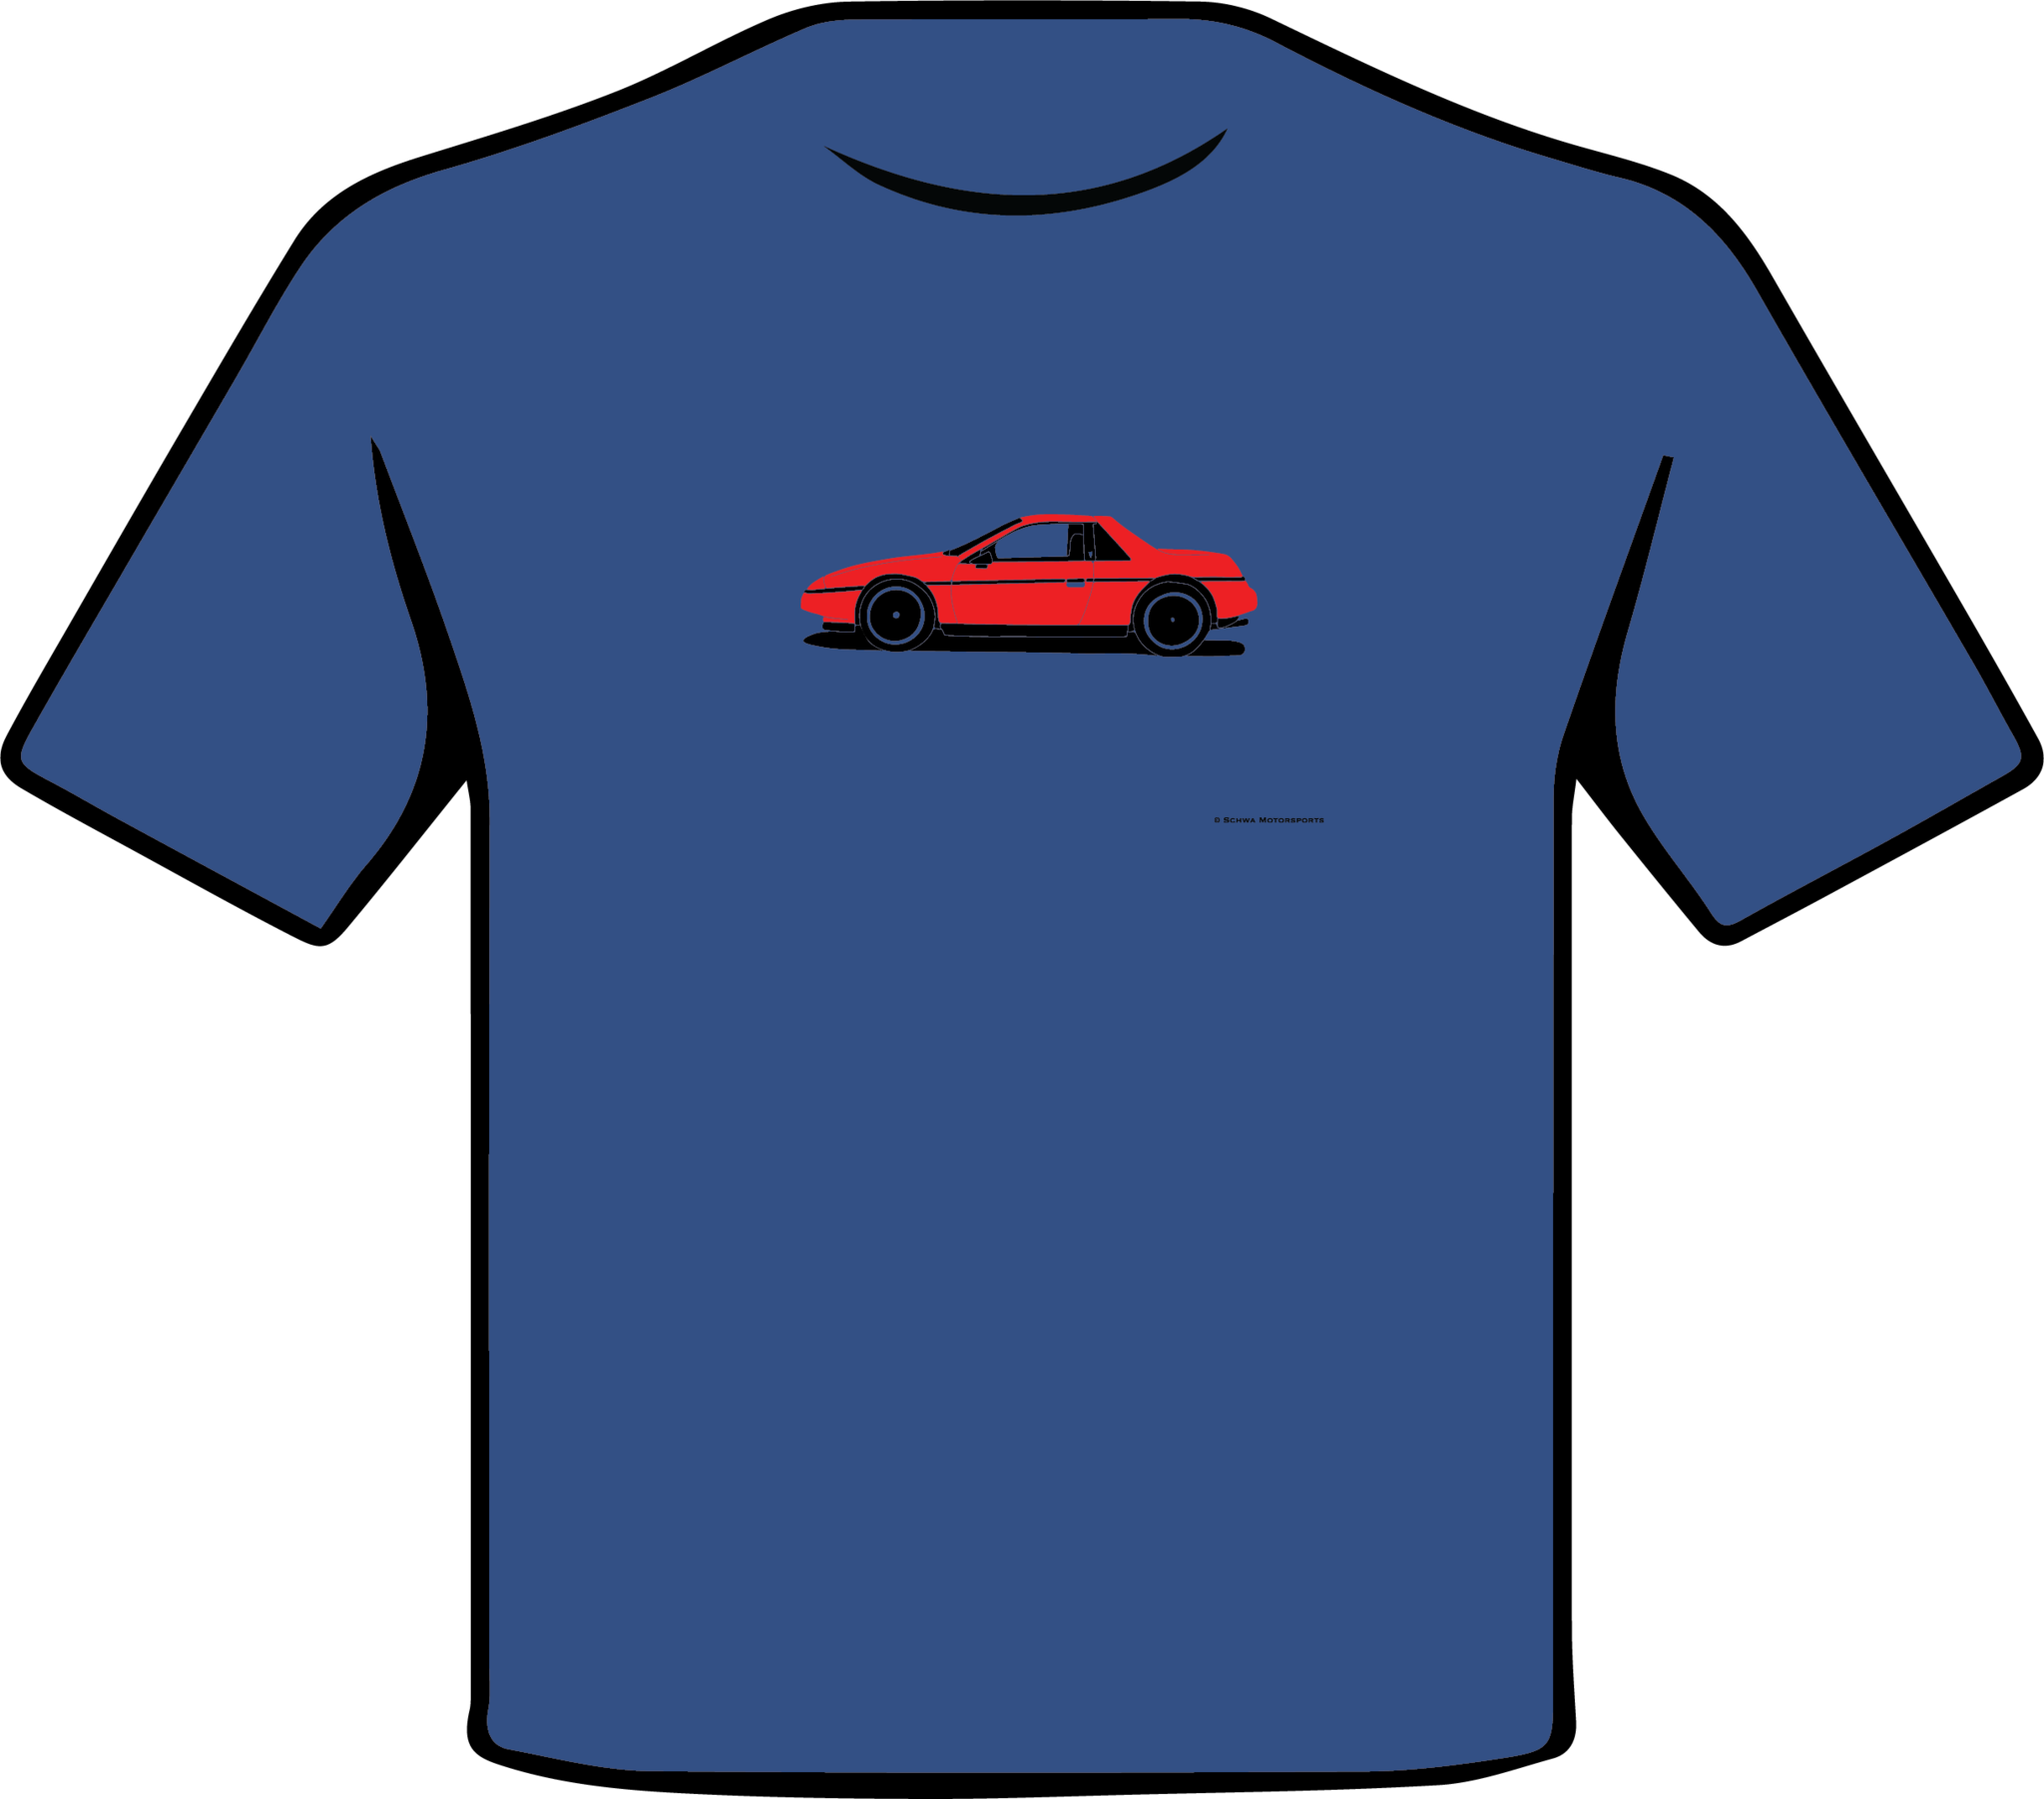 Pontiac Fiero Coupe Side View T-Shirt